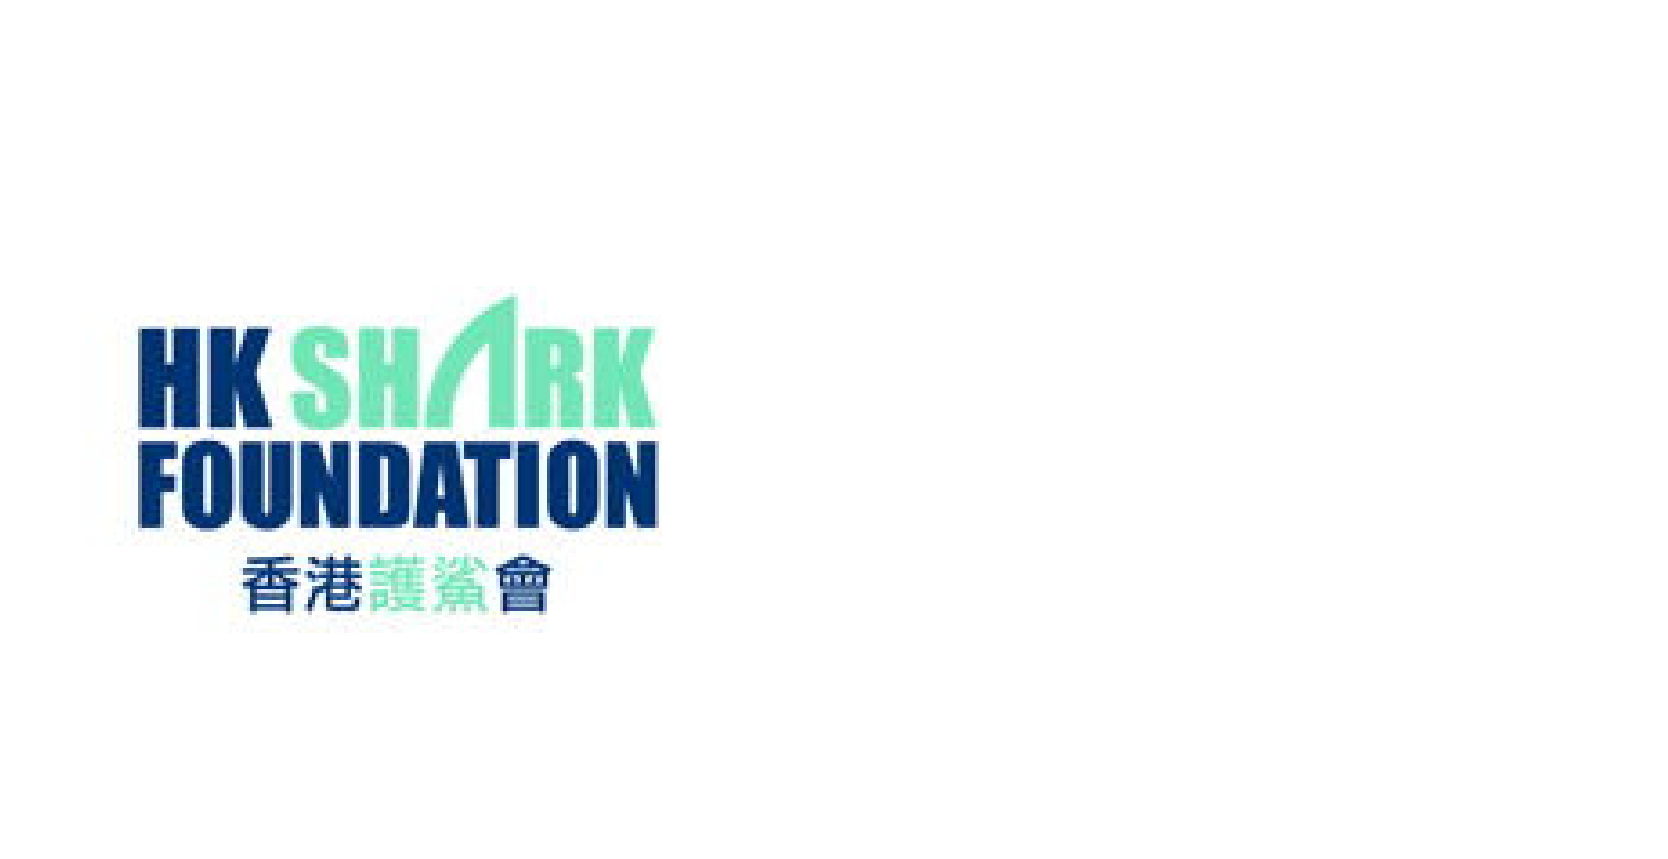 HK Shark Foundation Logo